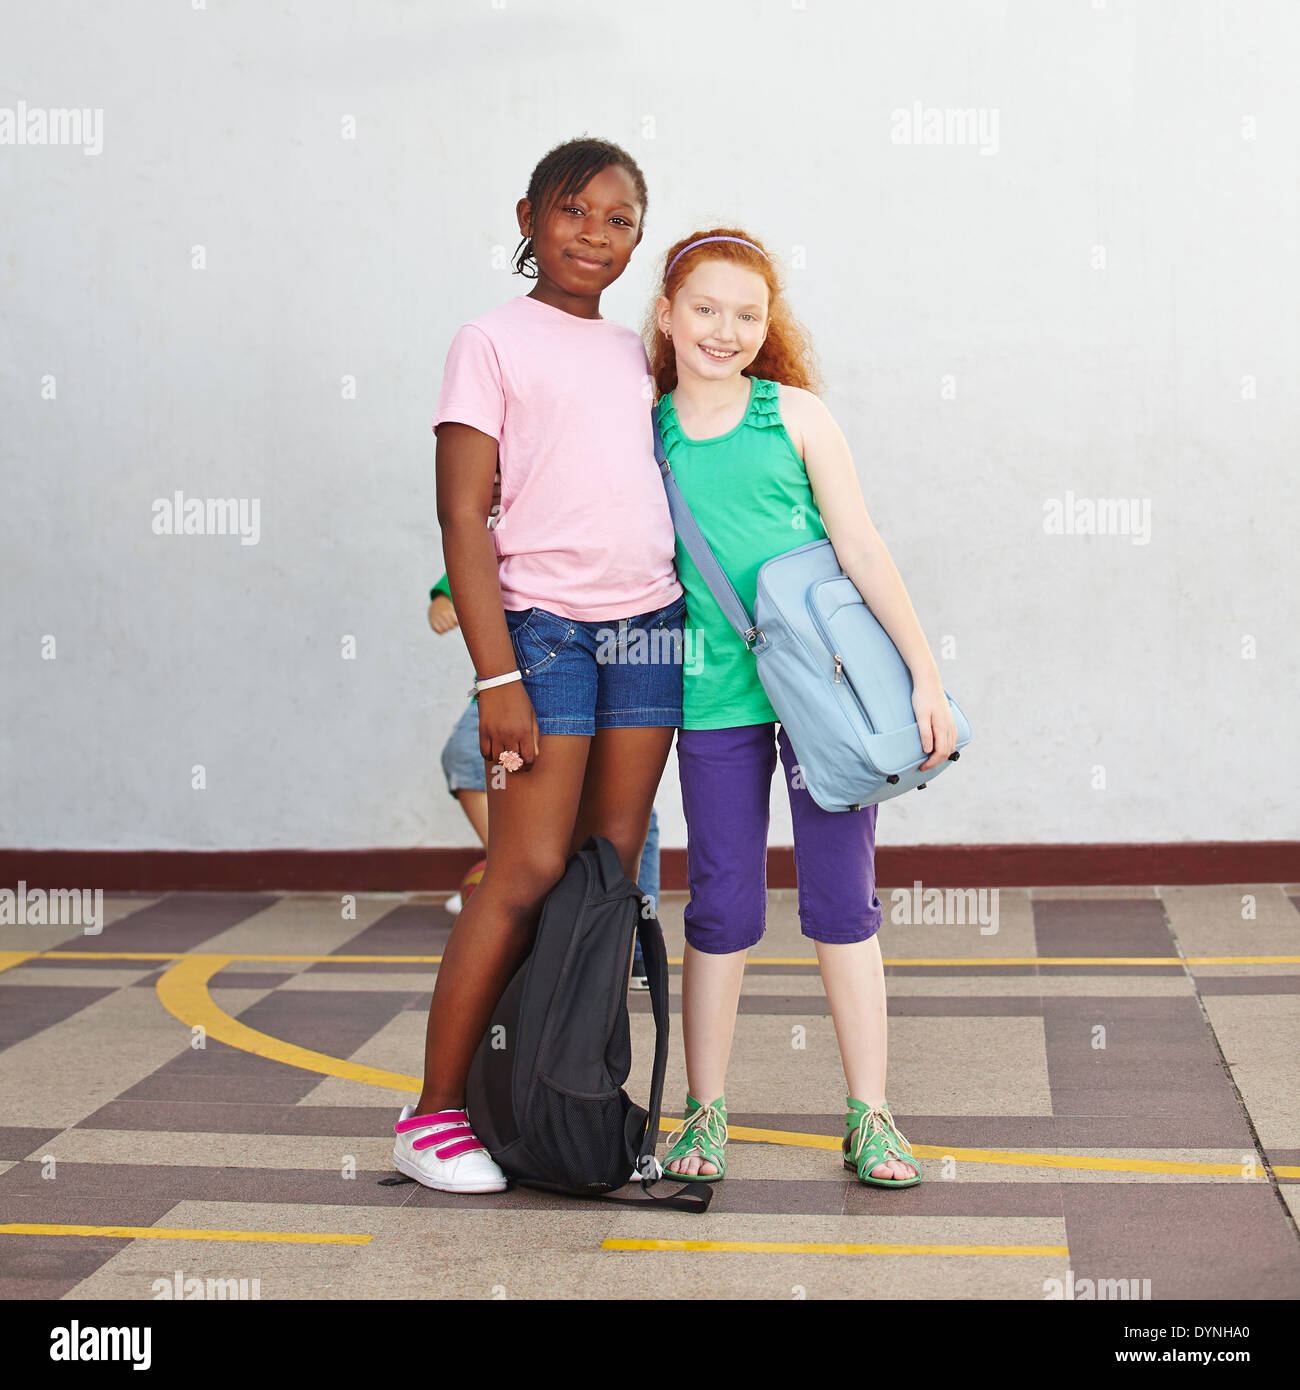 Two happy girls on schoolyard in elementary school Stock Photo